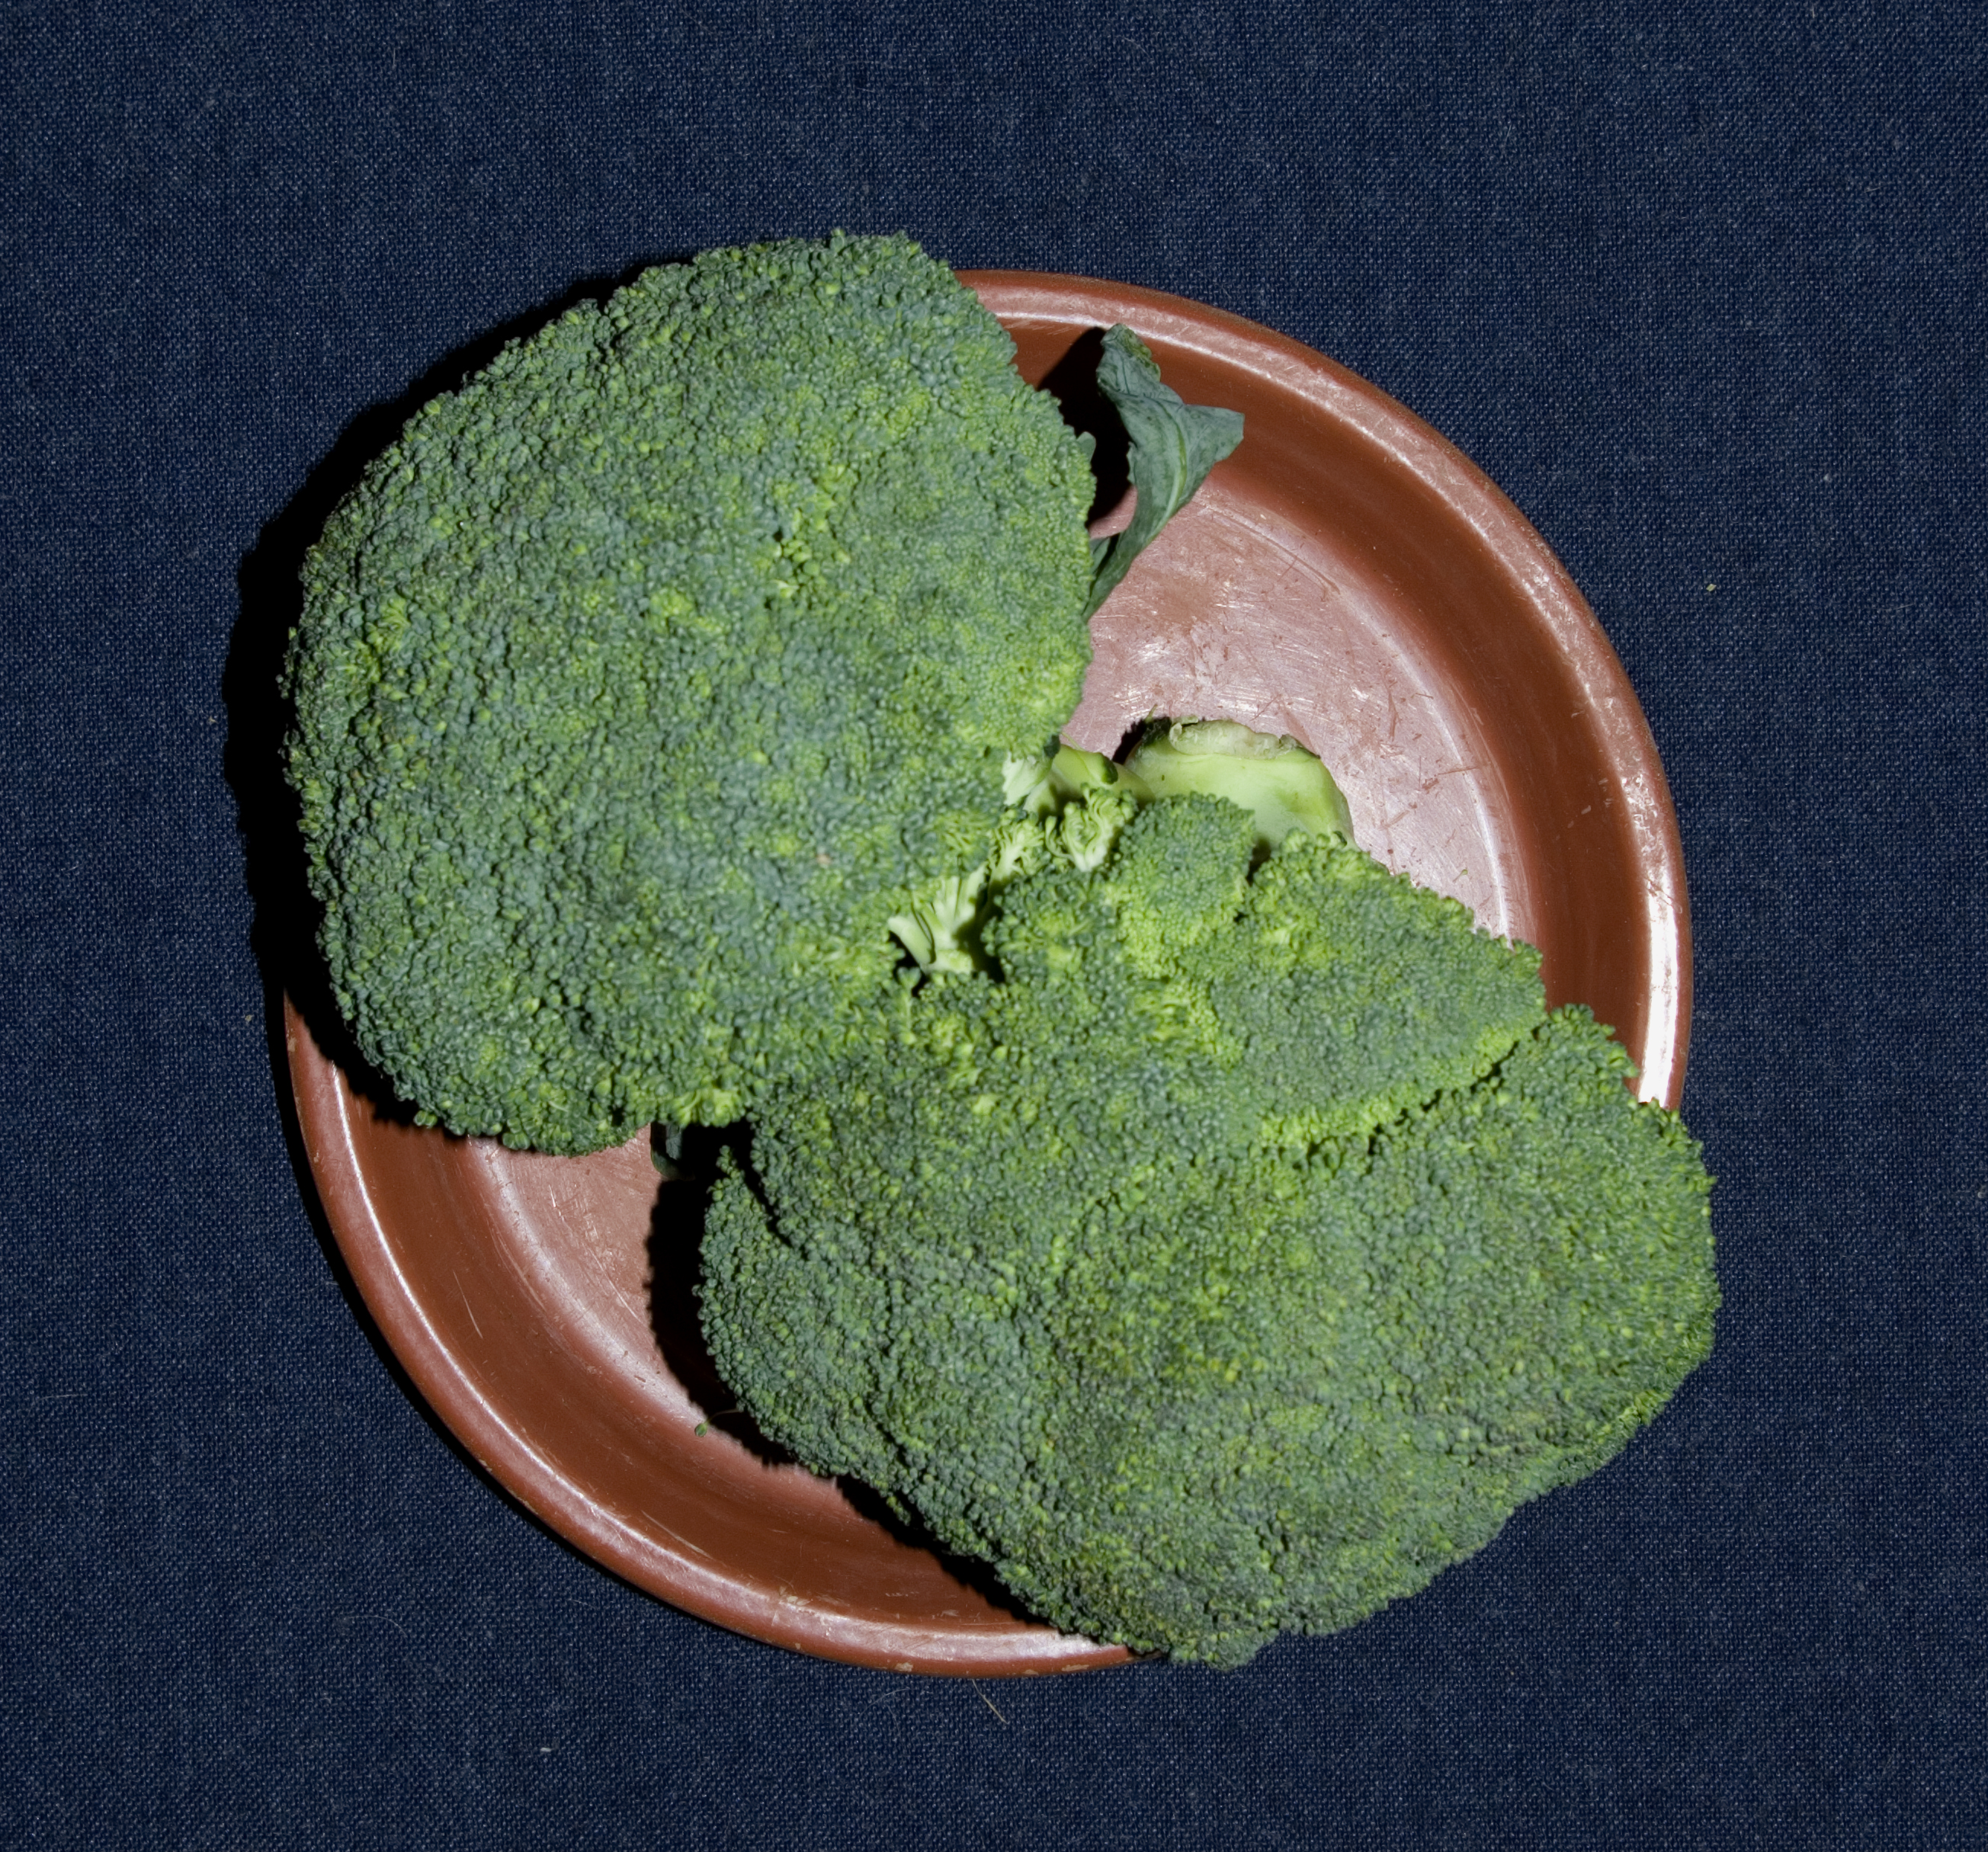 2 Broccoli florets